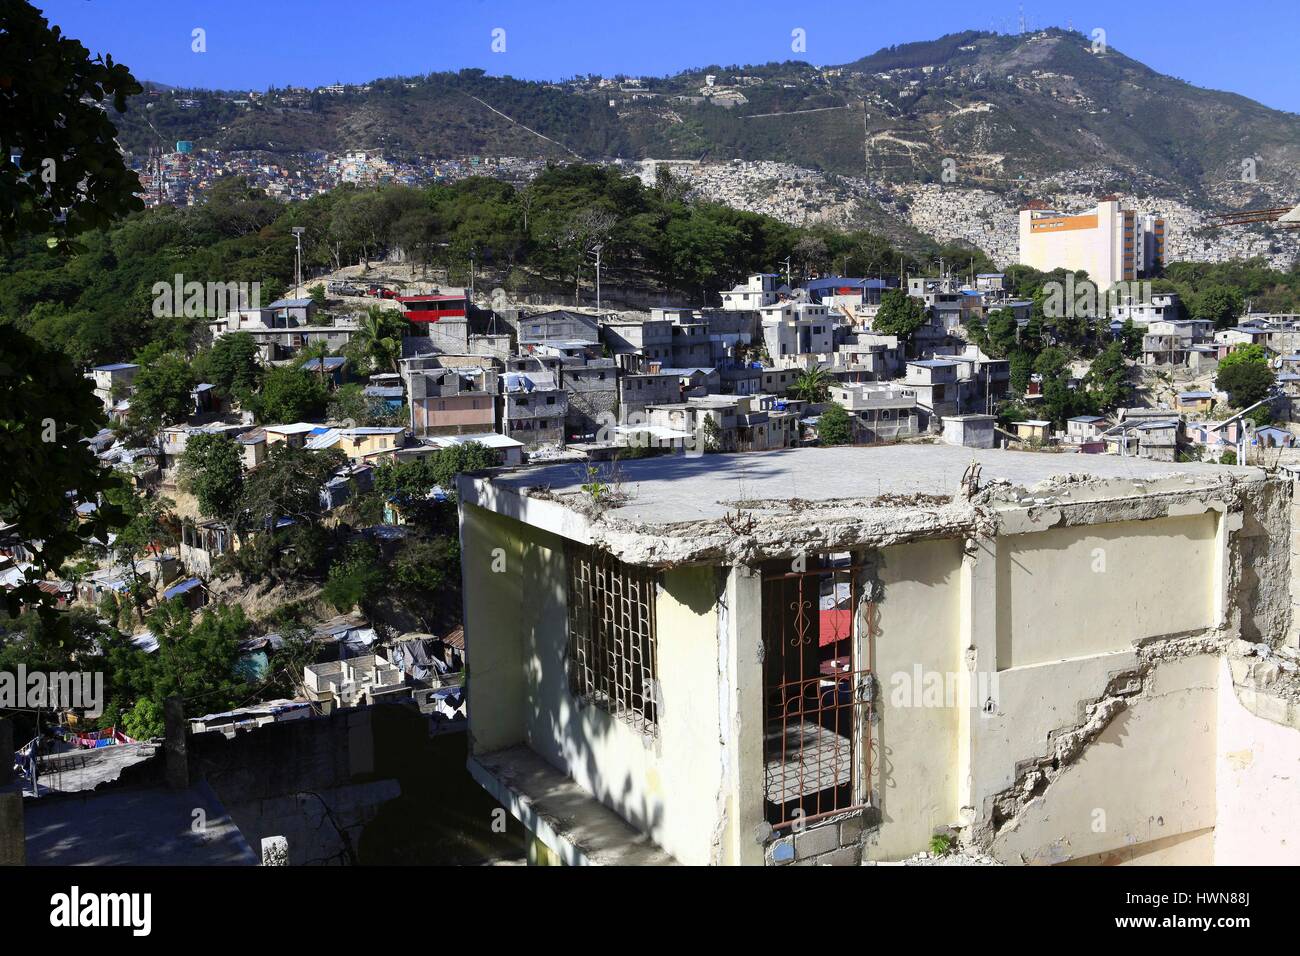 Haiti, Port au Prince, Morne Hercule, shantytown Stock Photo